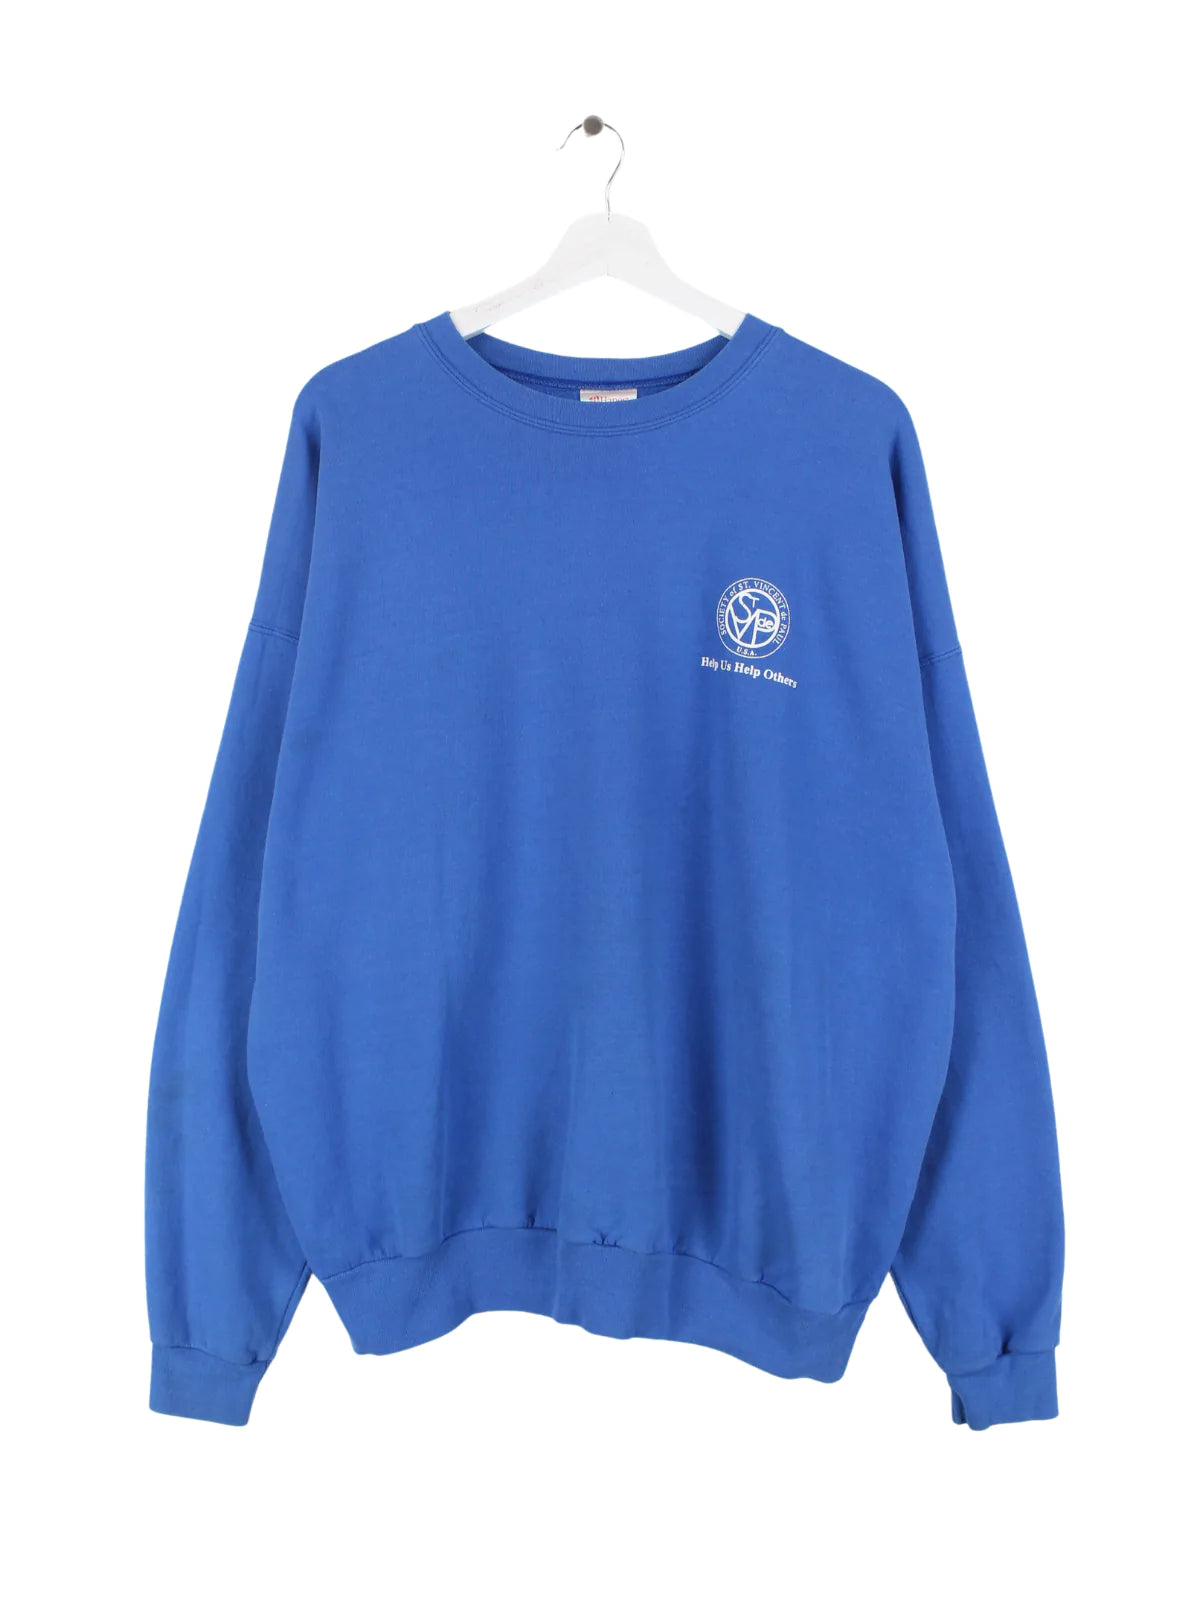 Hanes Print Sweater Blau XL